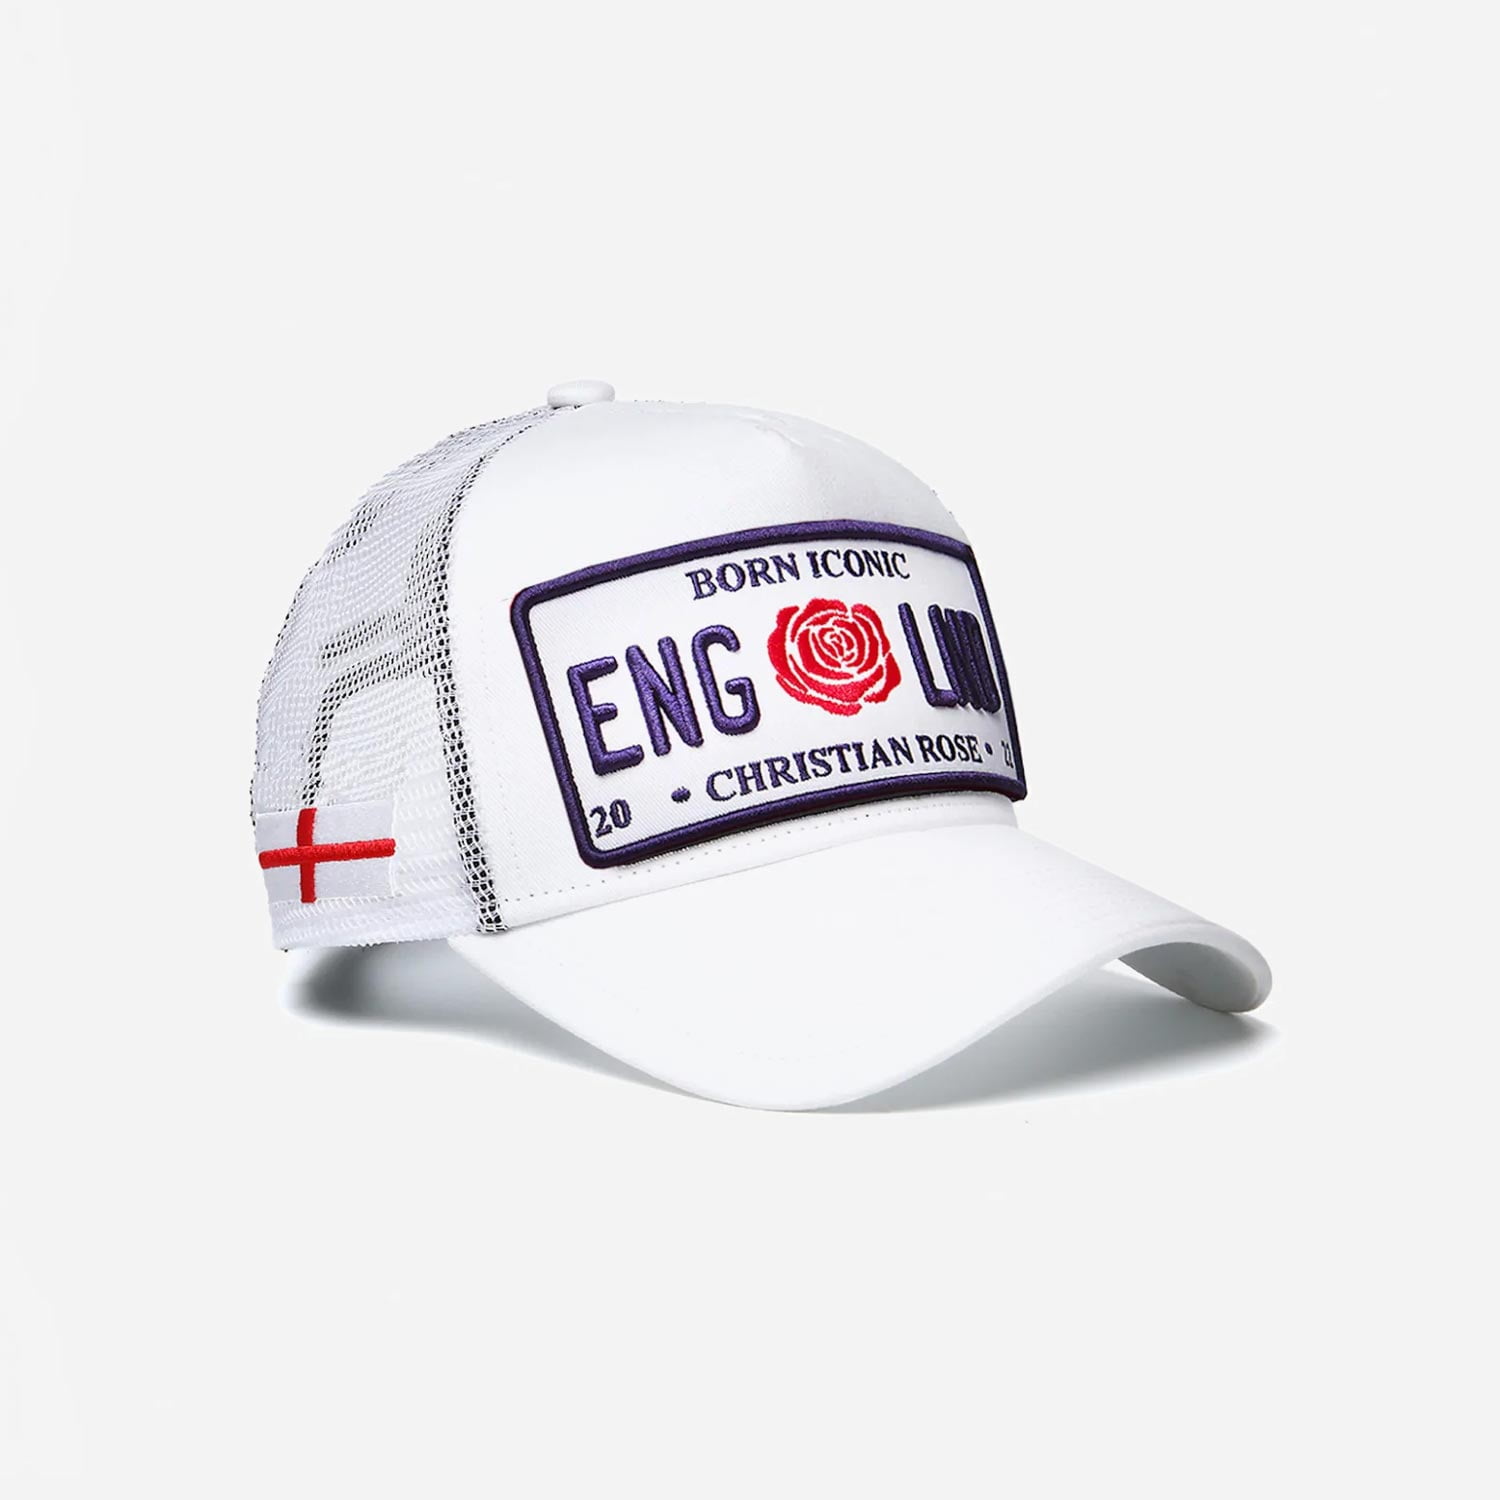 Christian Rose England World Cup Trucker Cap - White/Navy